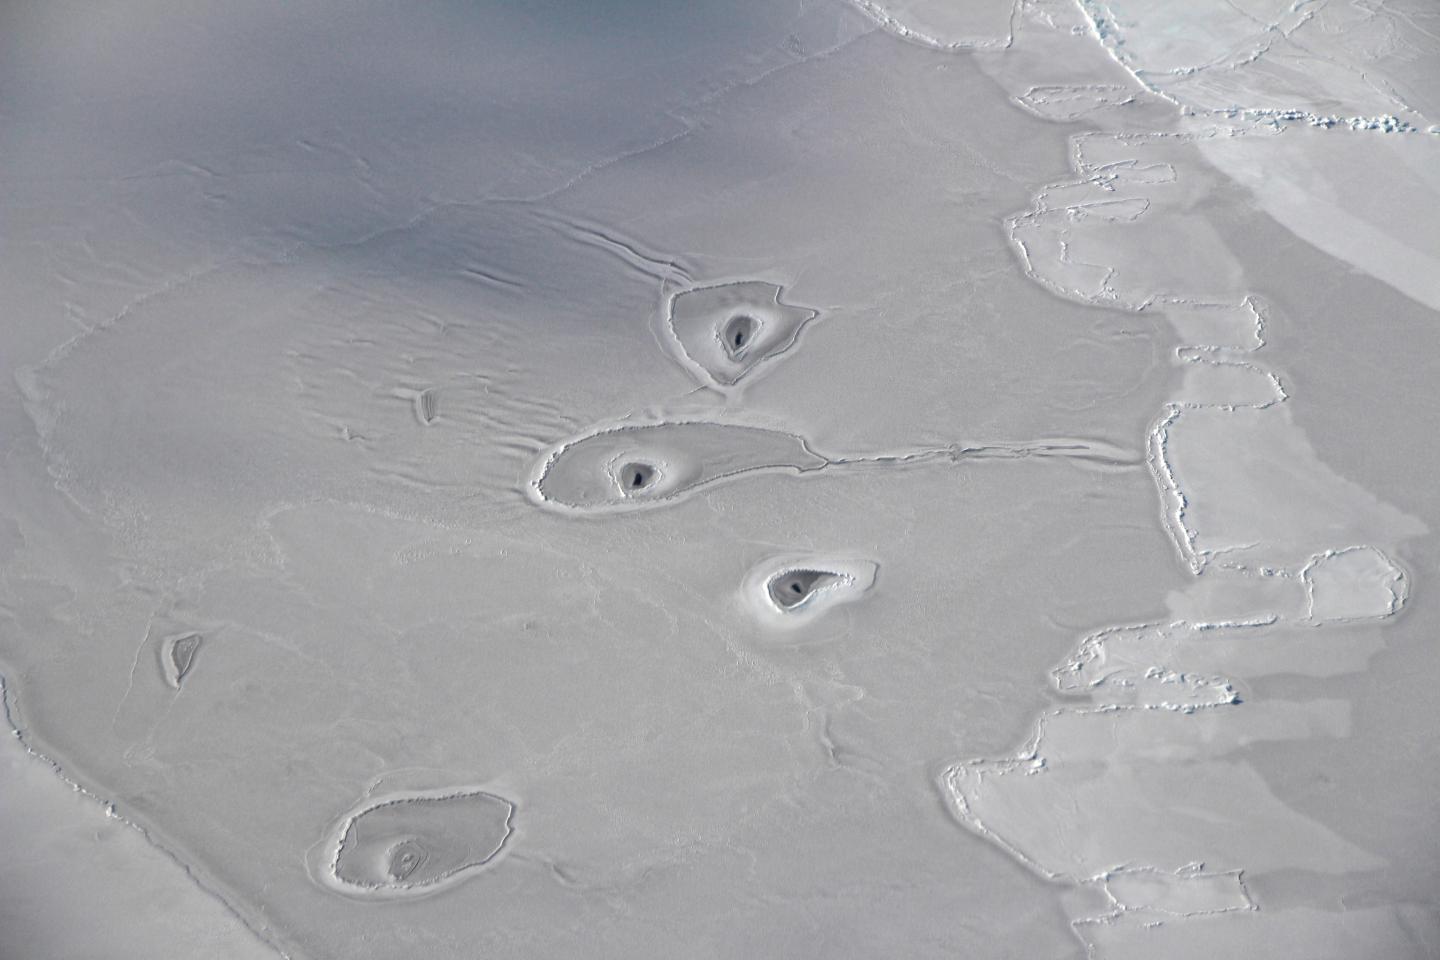 NASAも説明不可能？「謎の氷の穴」が北極で発見されるの画像 1/2